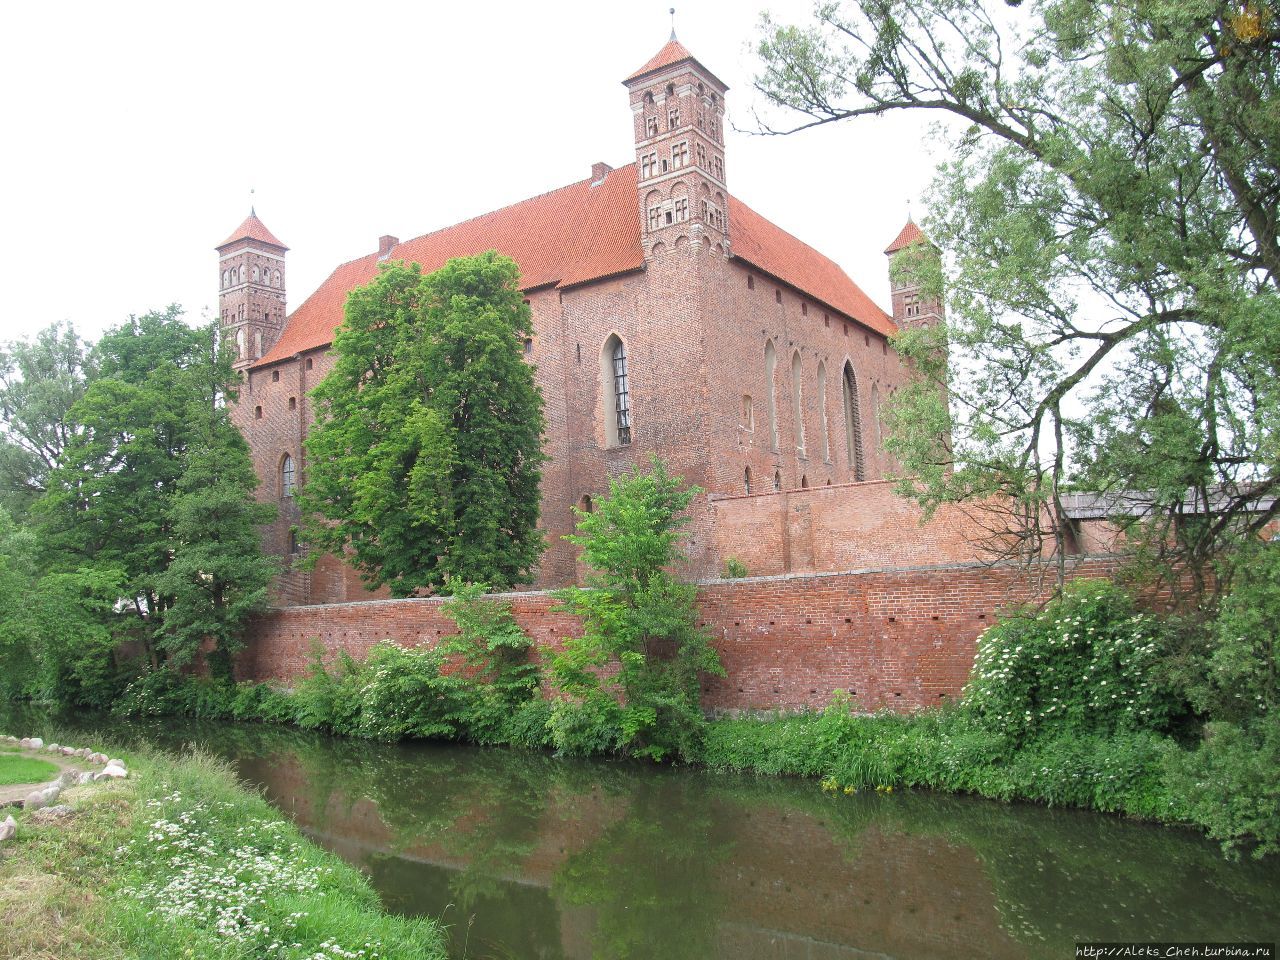 Лидзбарк-Варминьски: Замок крестоносцев на земле пруссов Лидзбарк, Польша